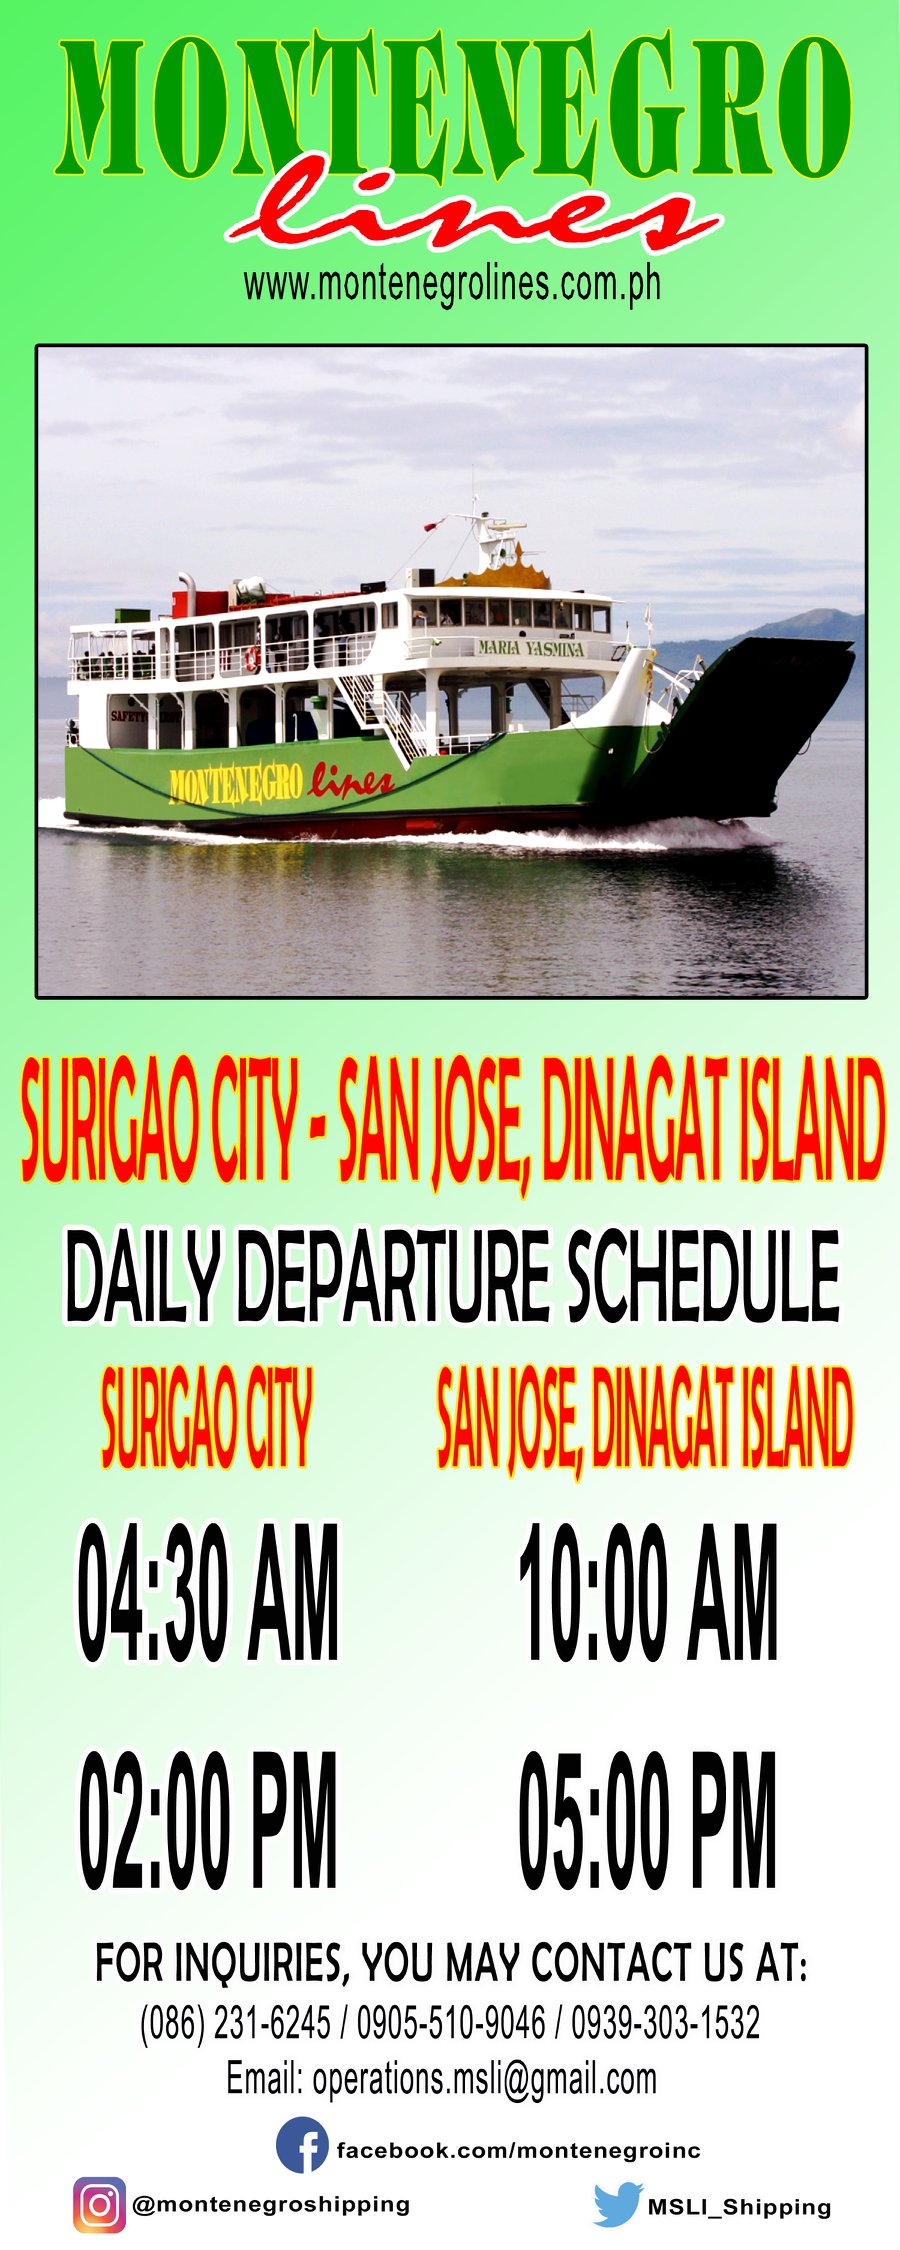 Montenegro Lines Surigao City-San Jose, Dinagat Island Ferry Schedule